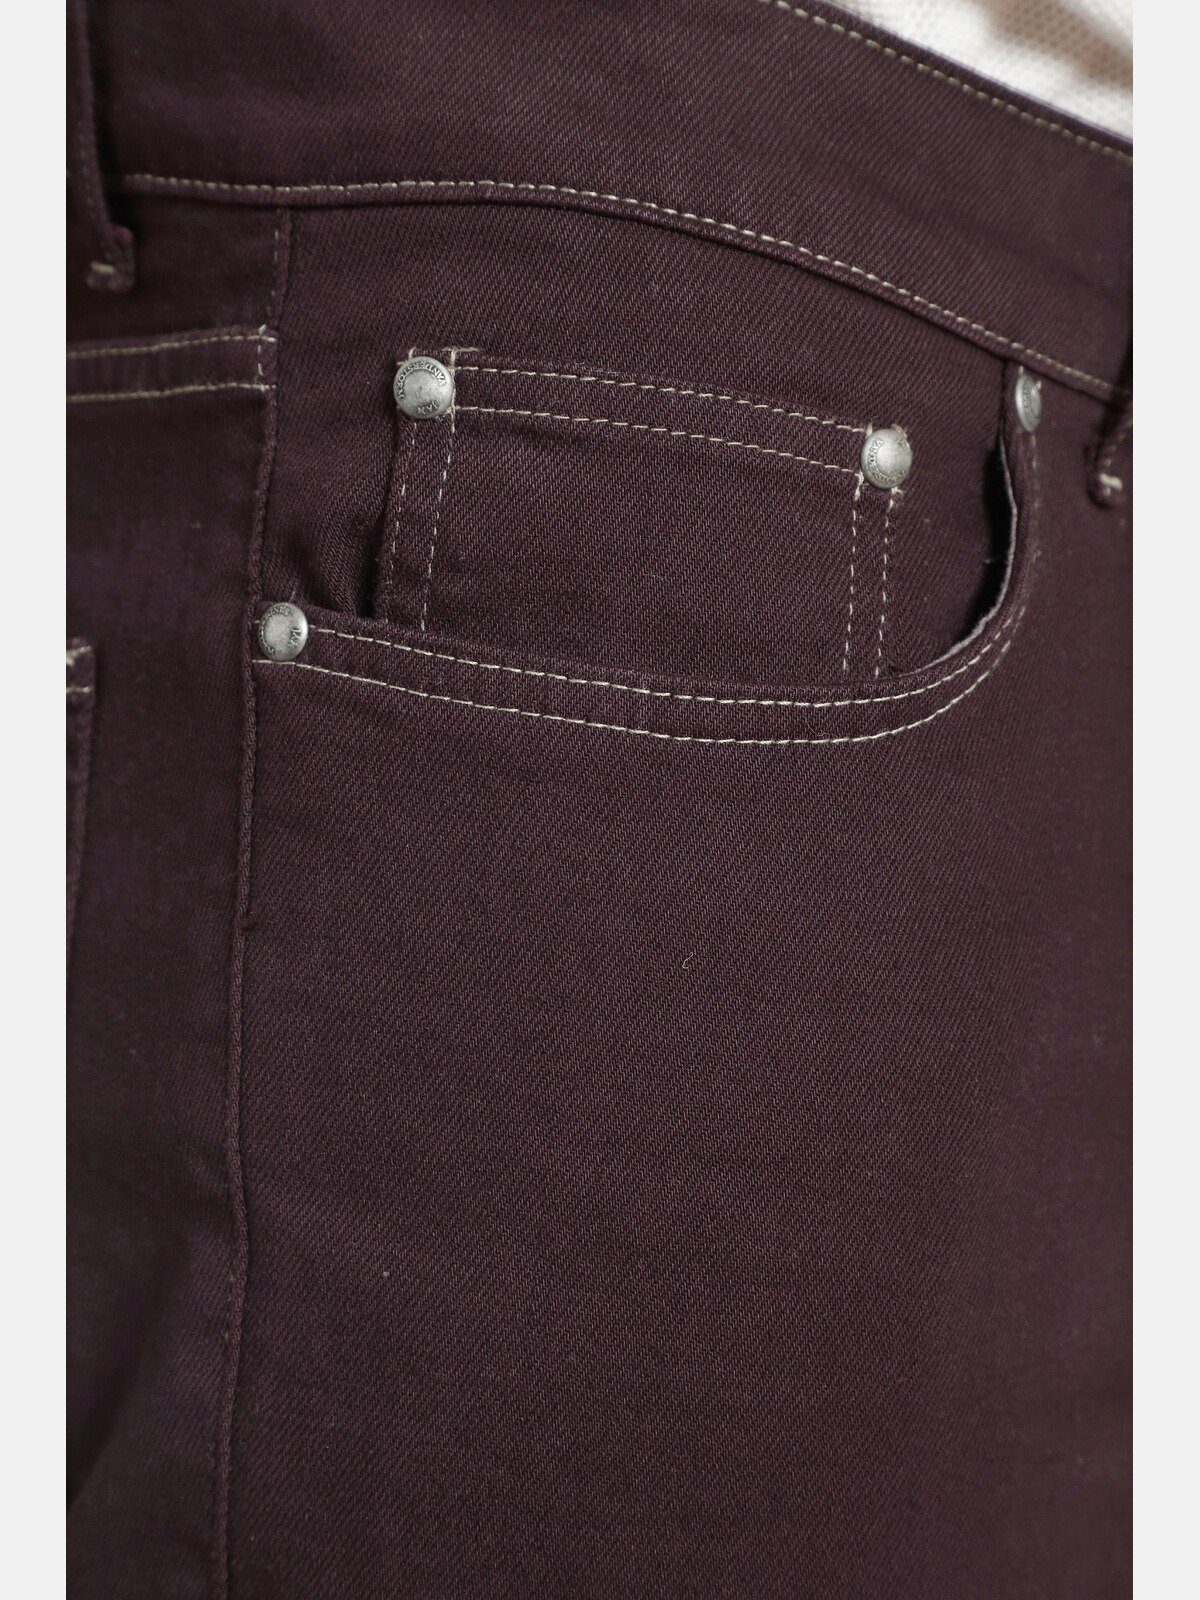 GUNNAR Stretch-Denim Vanderstorm Jan gemustert 5-Pocket-Jeans angenehmer